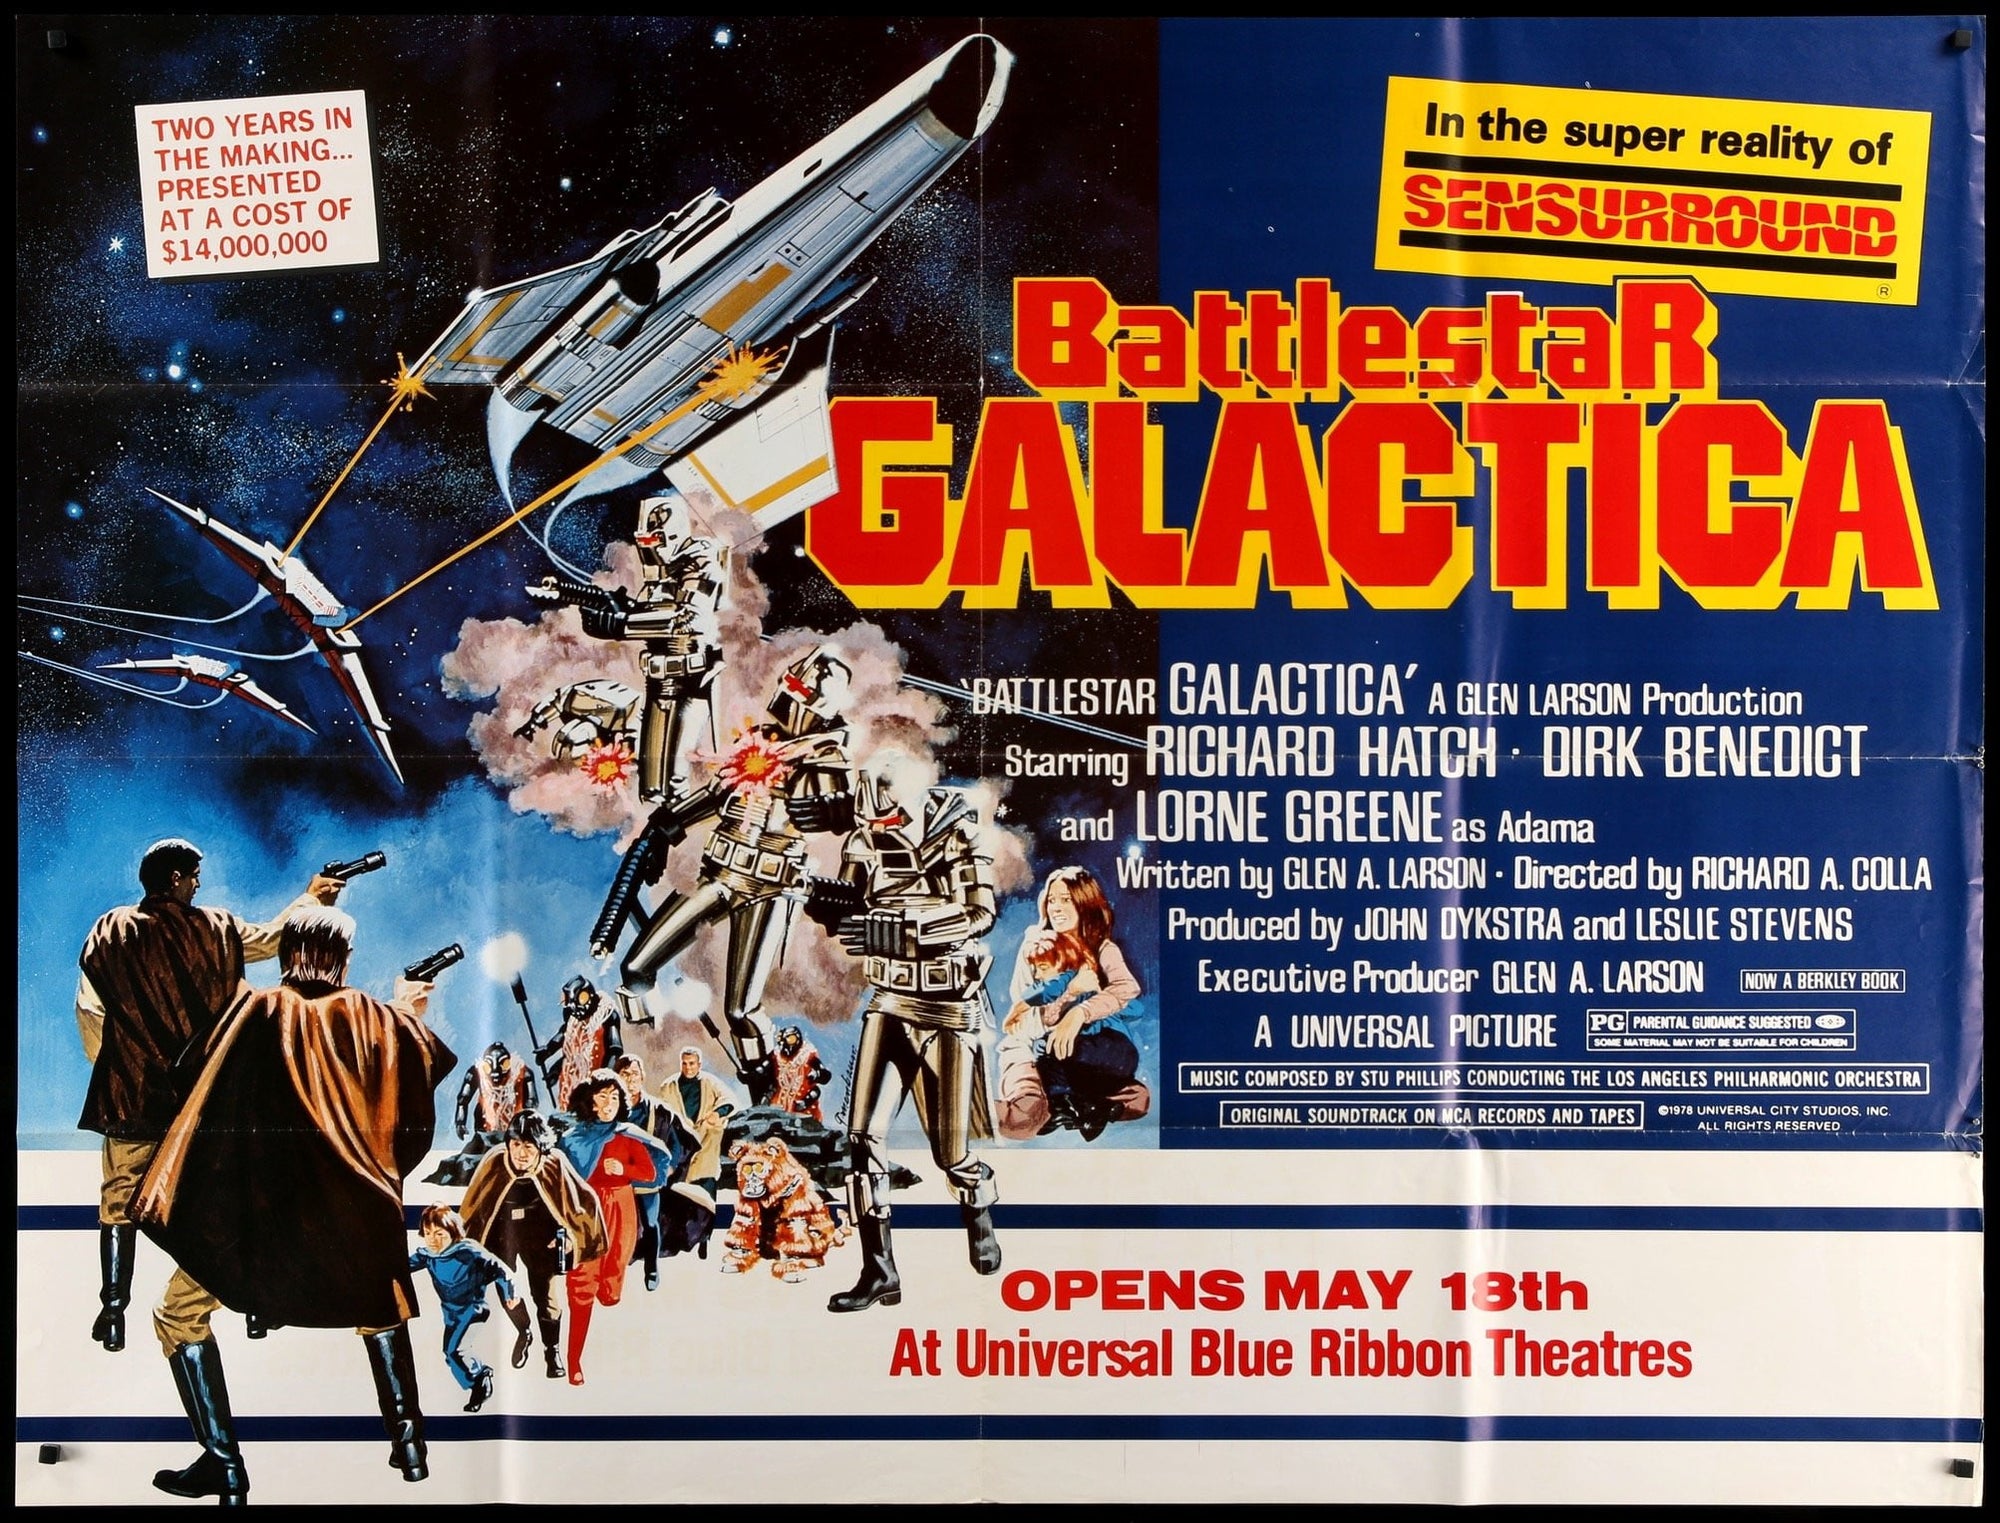 Battlestar Galactica (1978) original movie poster for sale at Original Film Art